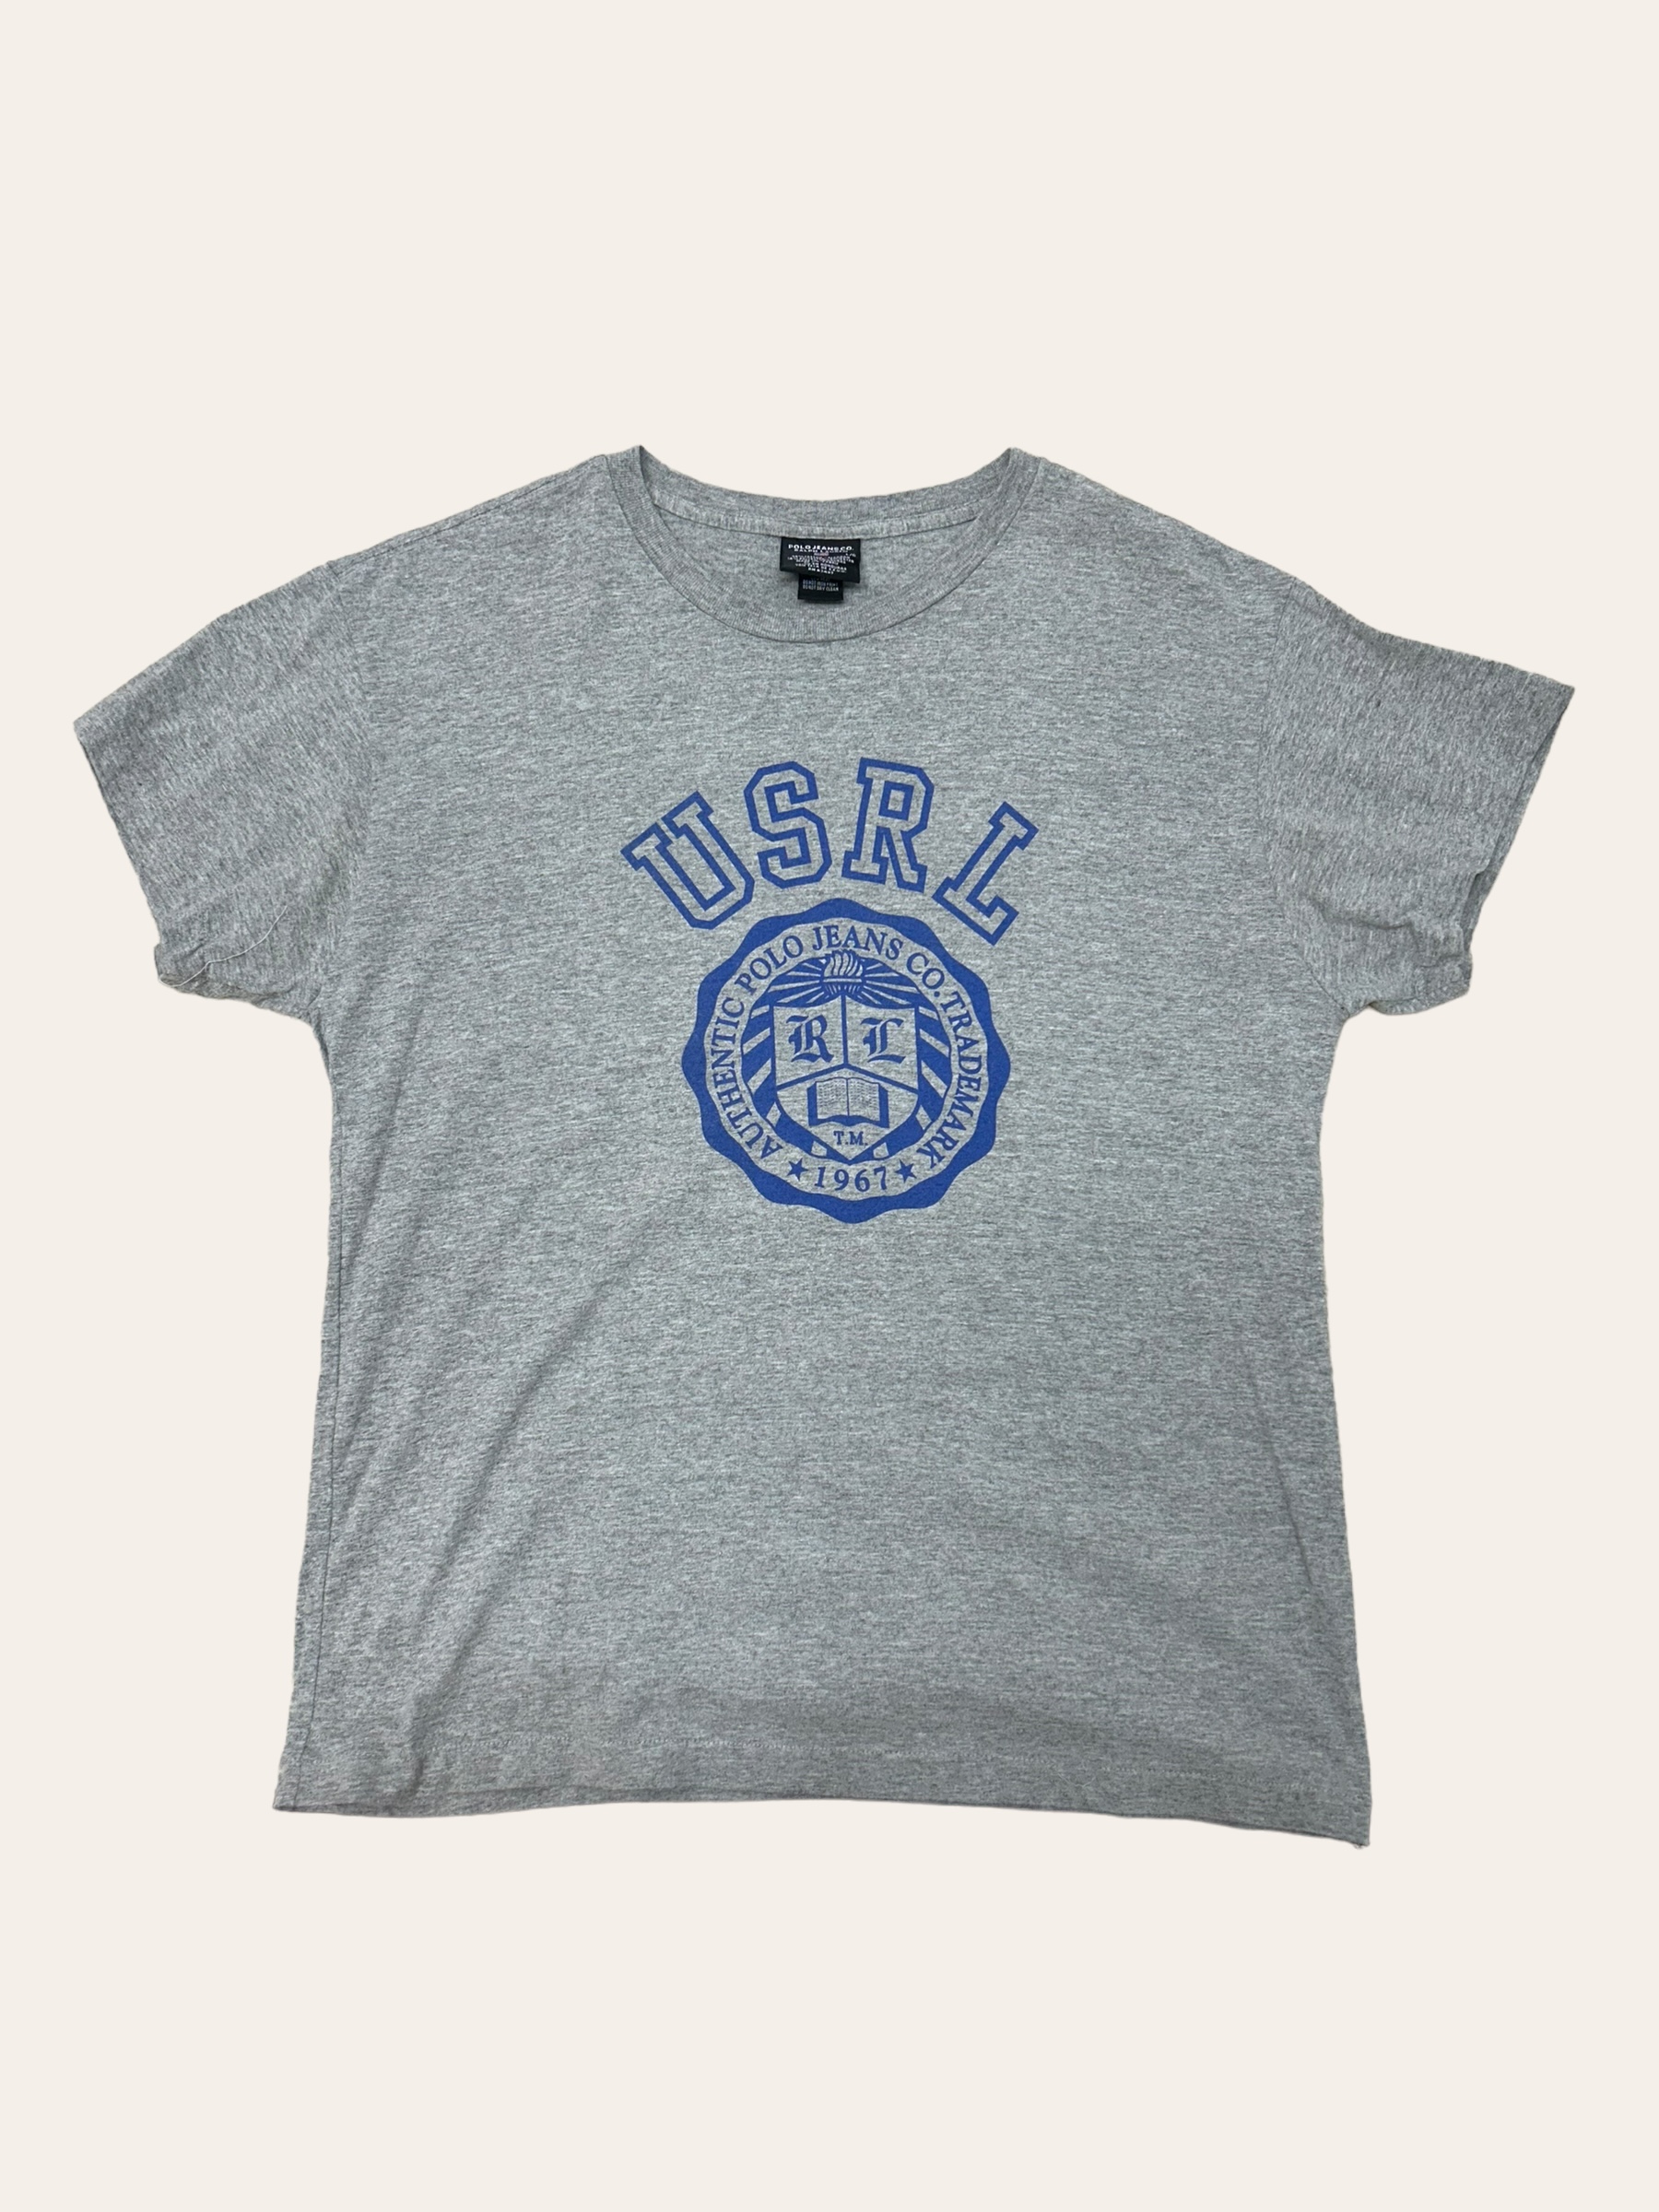 Polo jeans company gray USRL printing T-shirt L